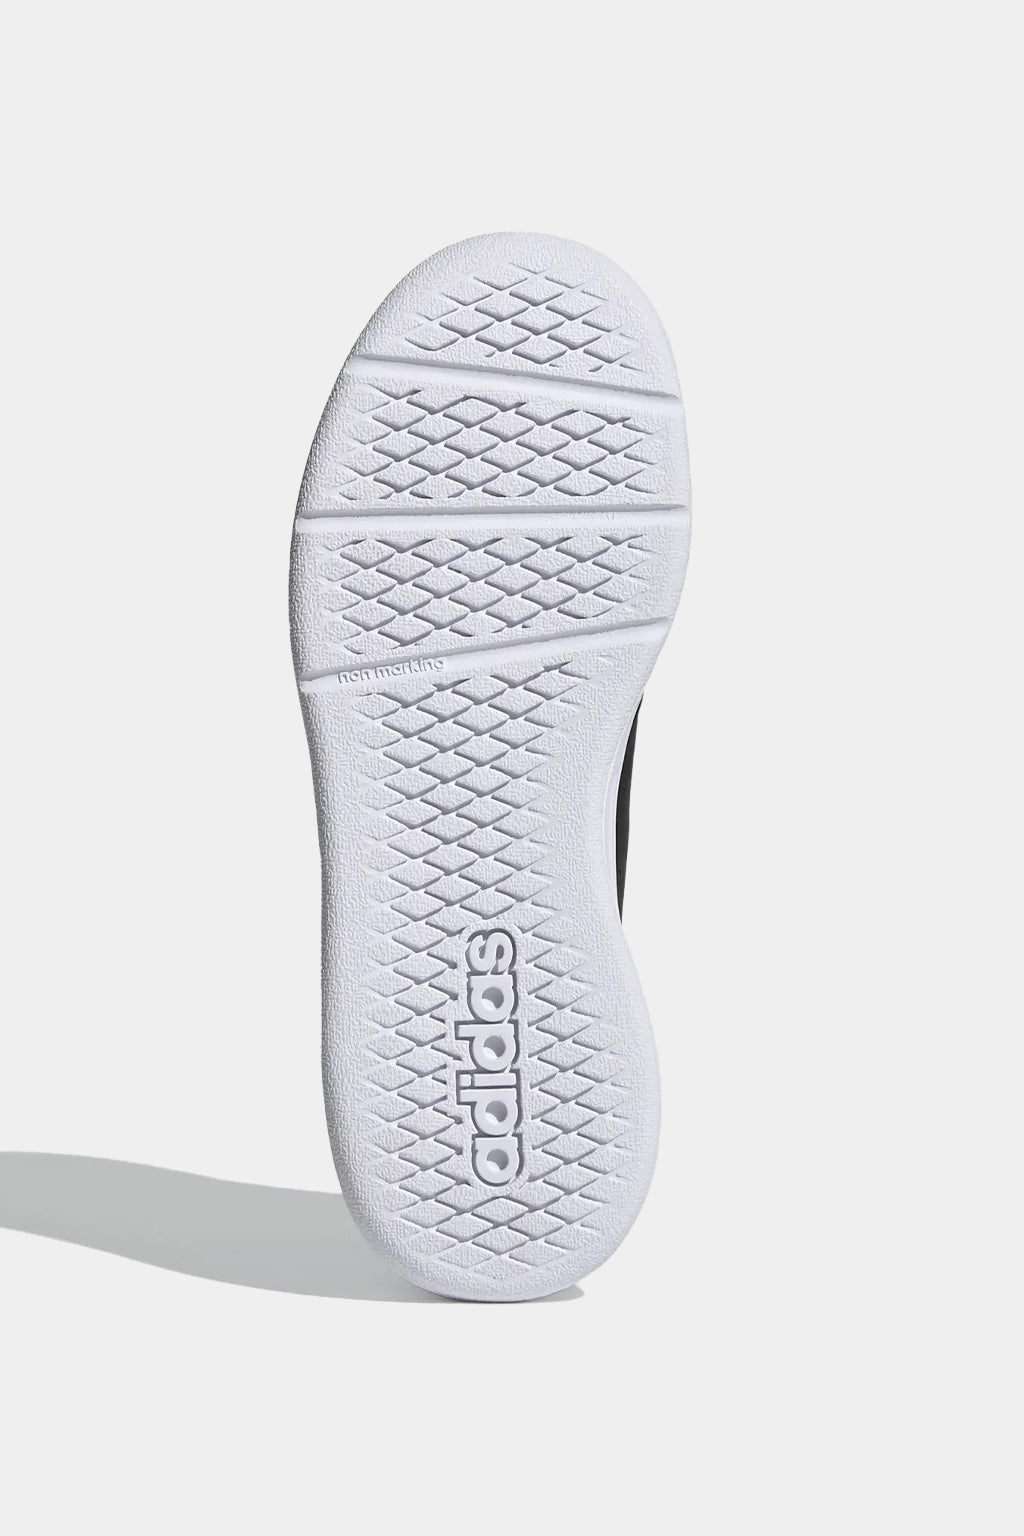 Adidas - Tensaur Shoes